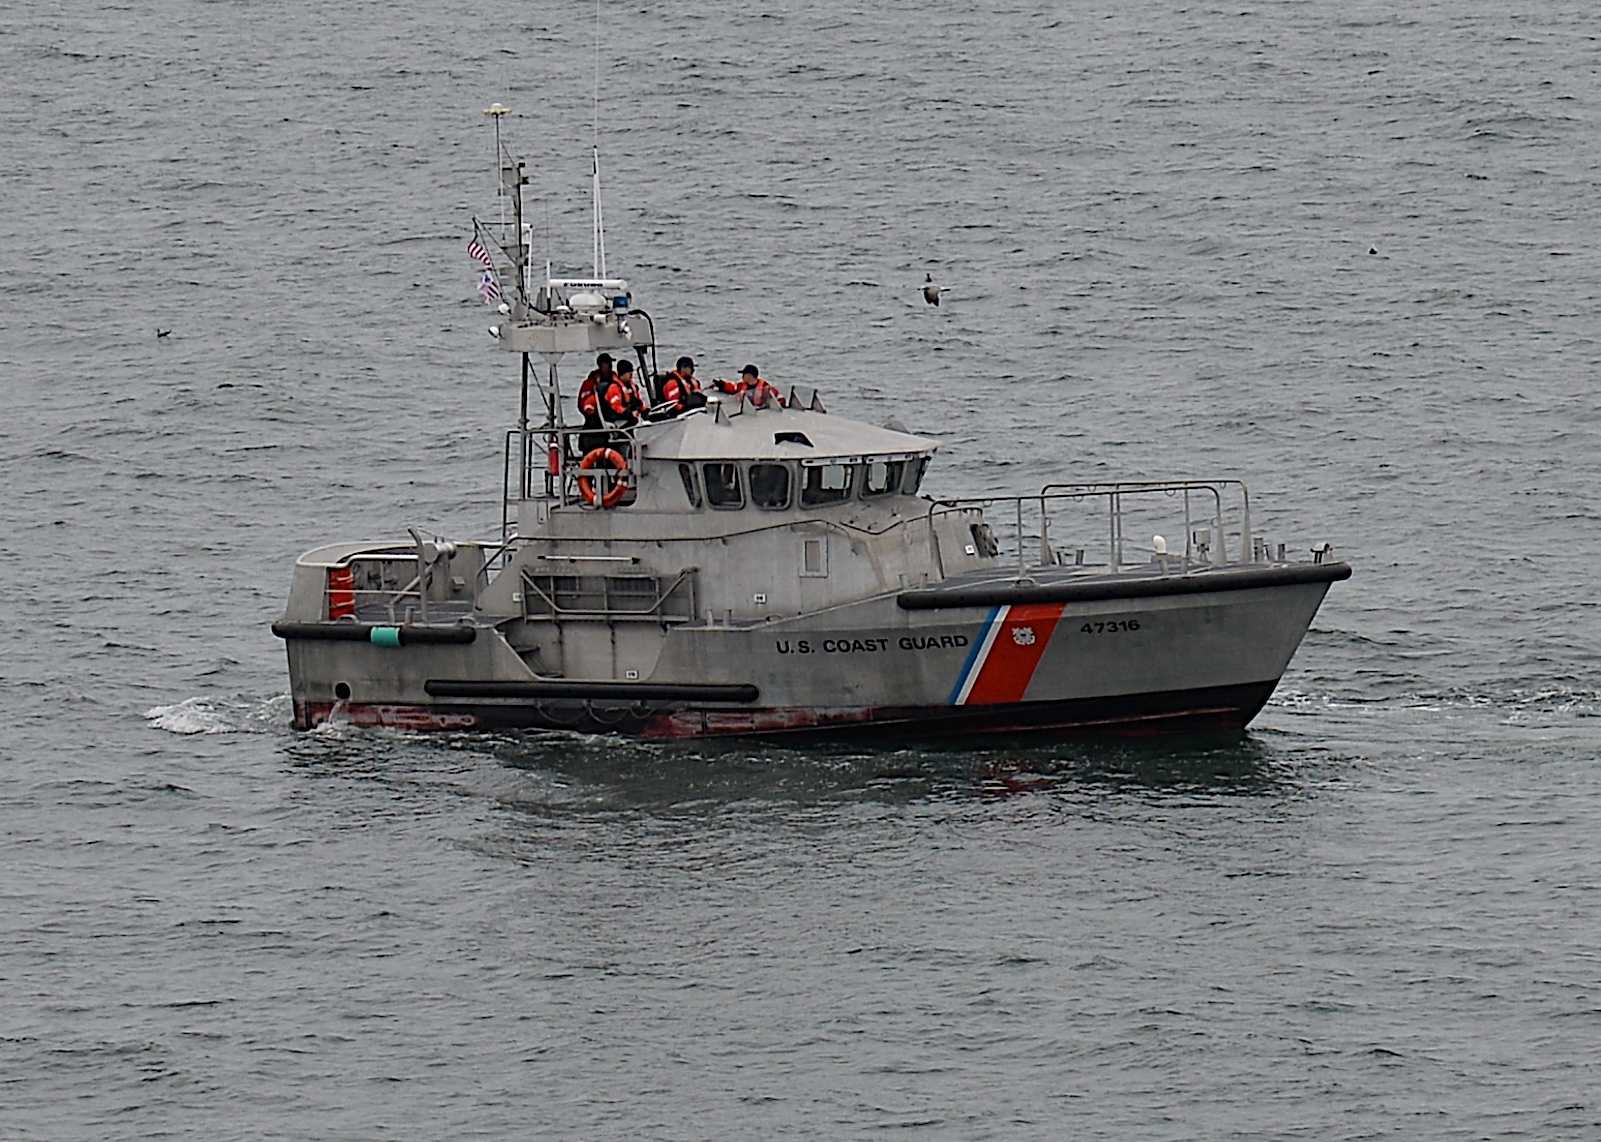 A Coast Guard boat offshore.